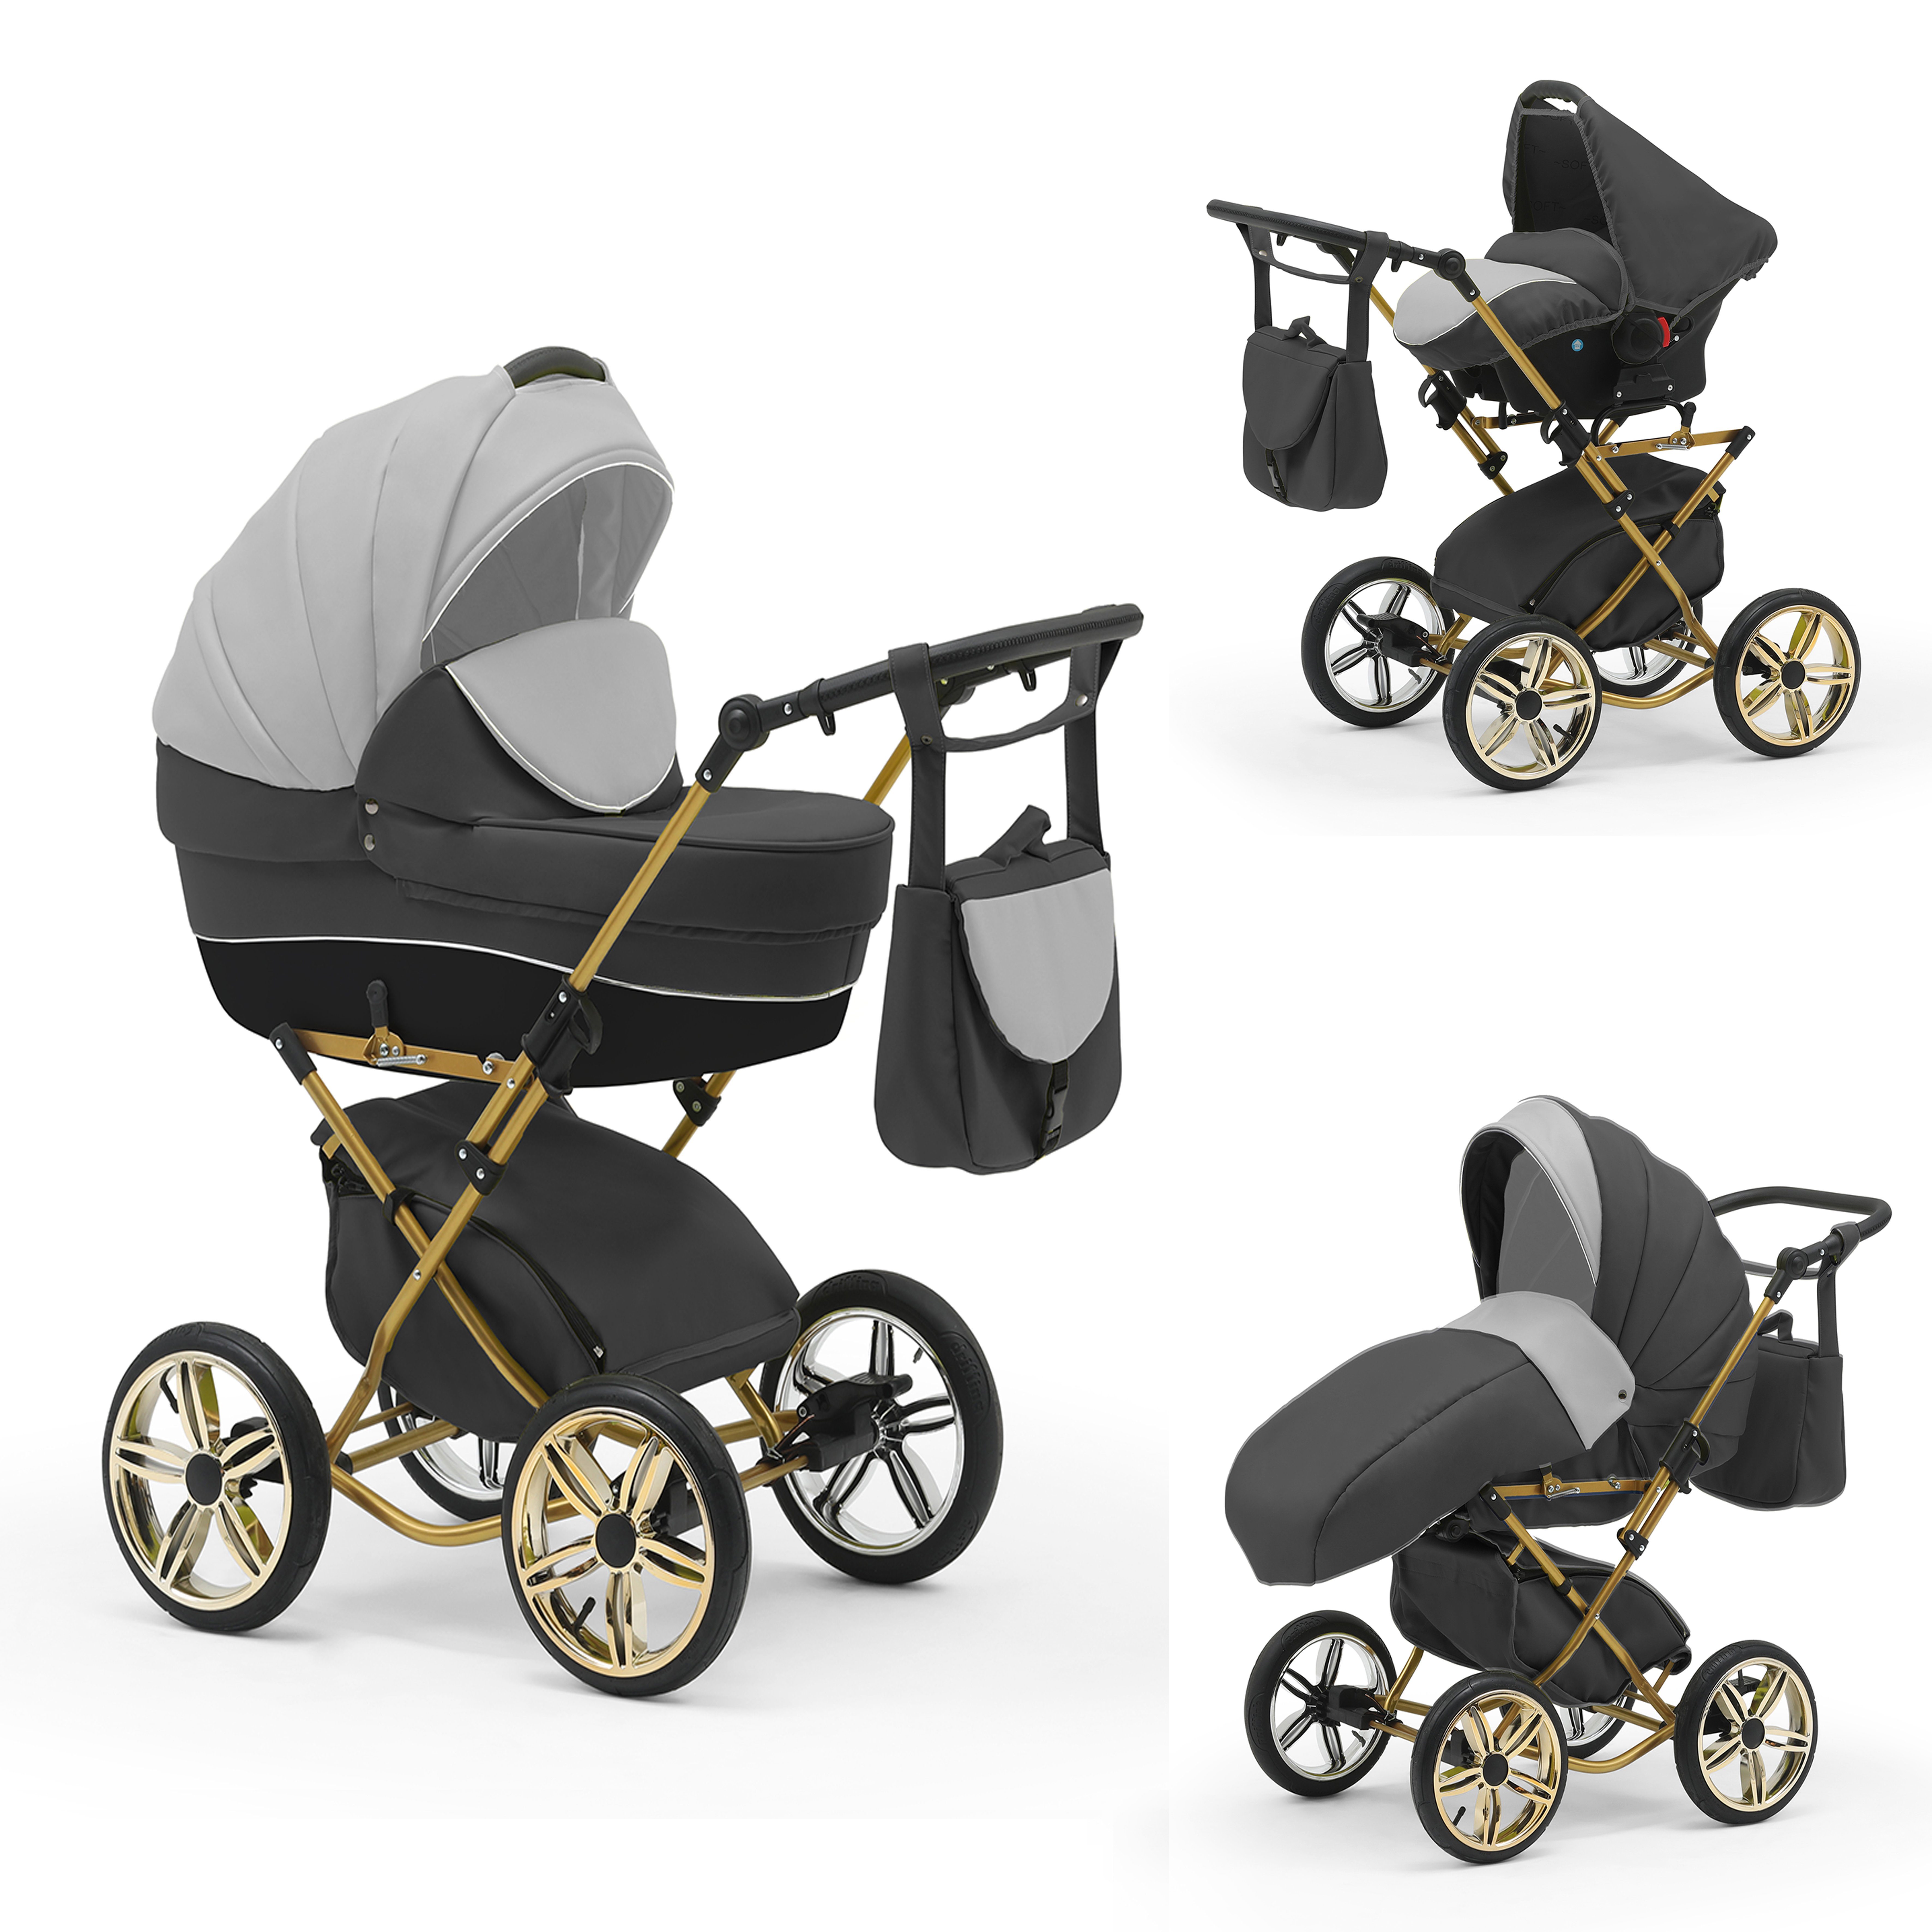 babies-on-wheels Kombi-Kinderwagen Sorento 3 in 1 inkl. Autositz - 13 Teile - in 10 Designs Dunkelgrau-Hellgrau